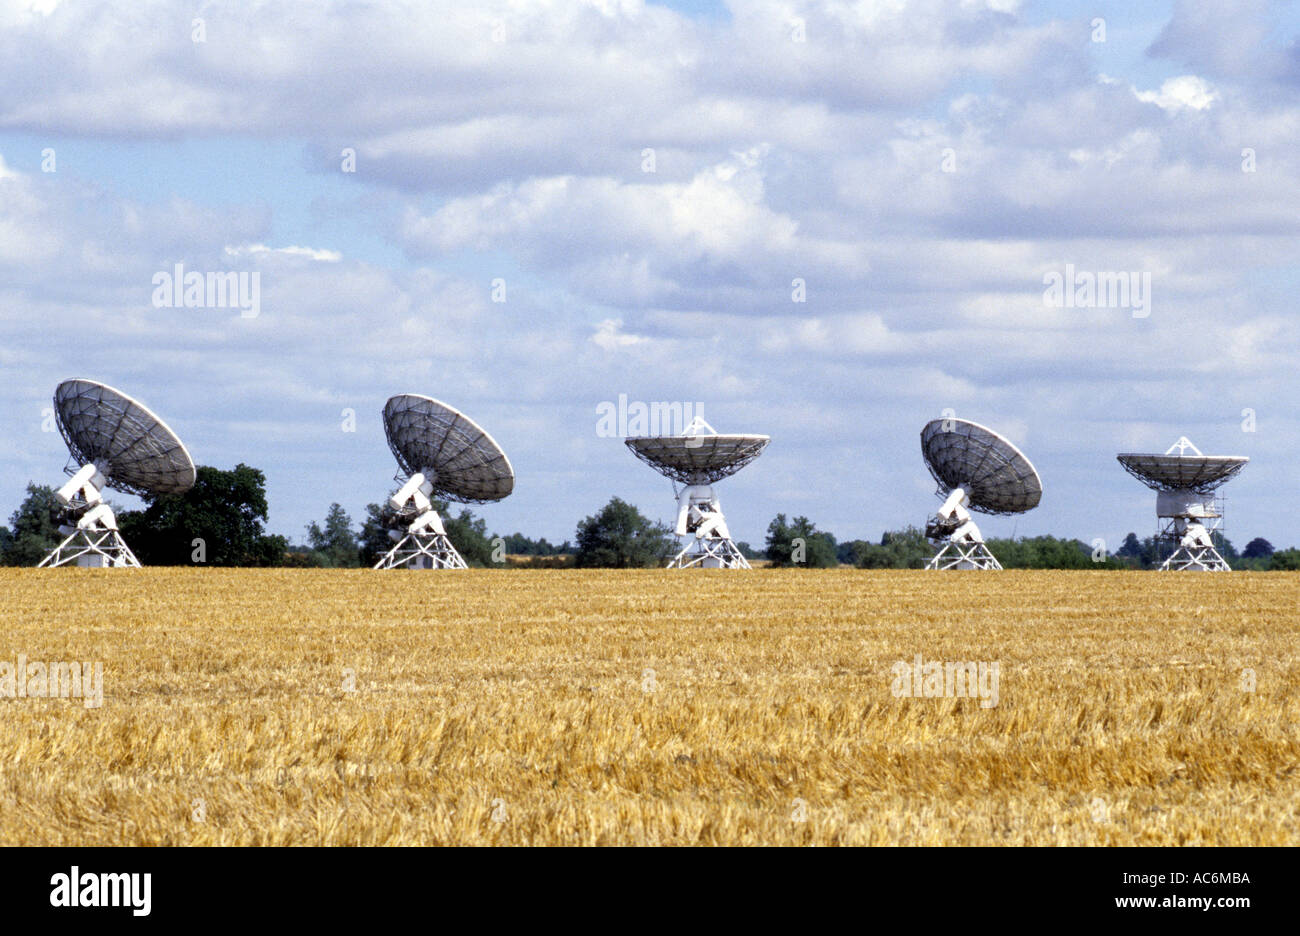 Satelliten-Bodenstation Cambridge, UK. Stockfoto